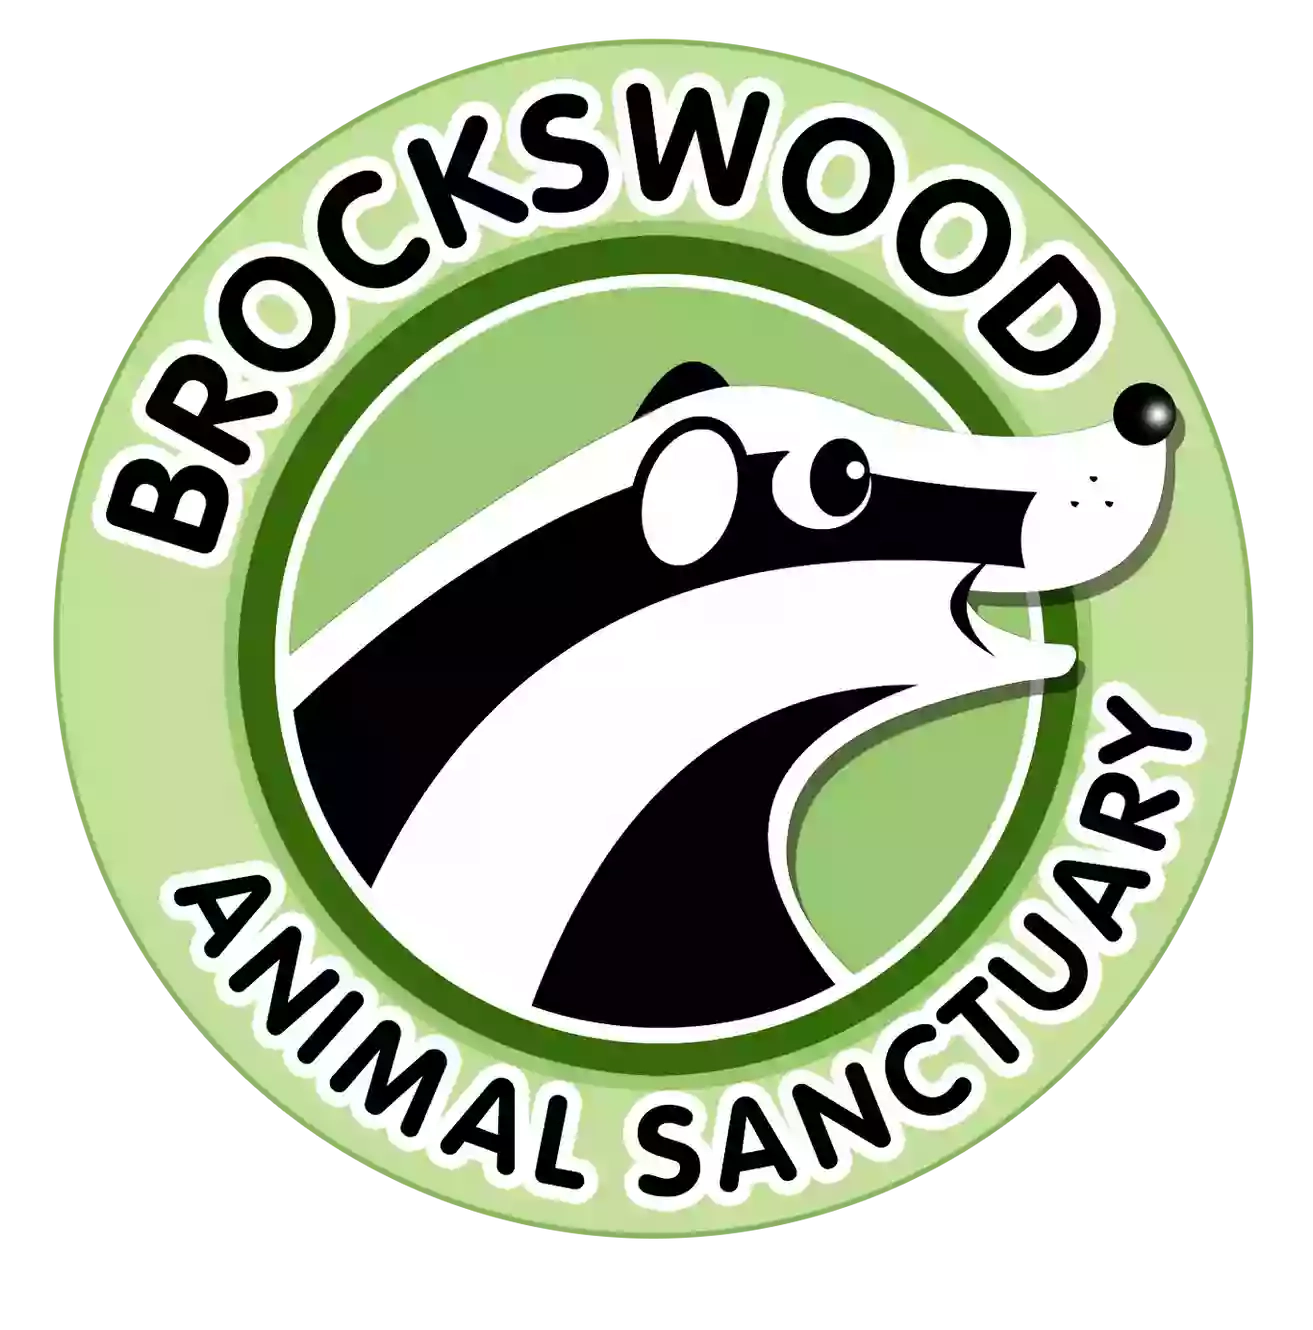 Brockswood Animal Sanctuary